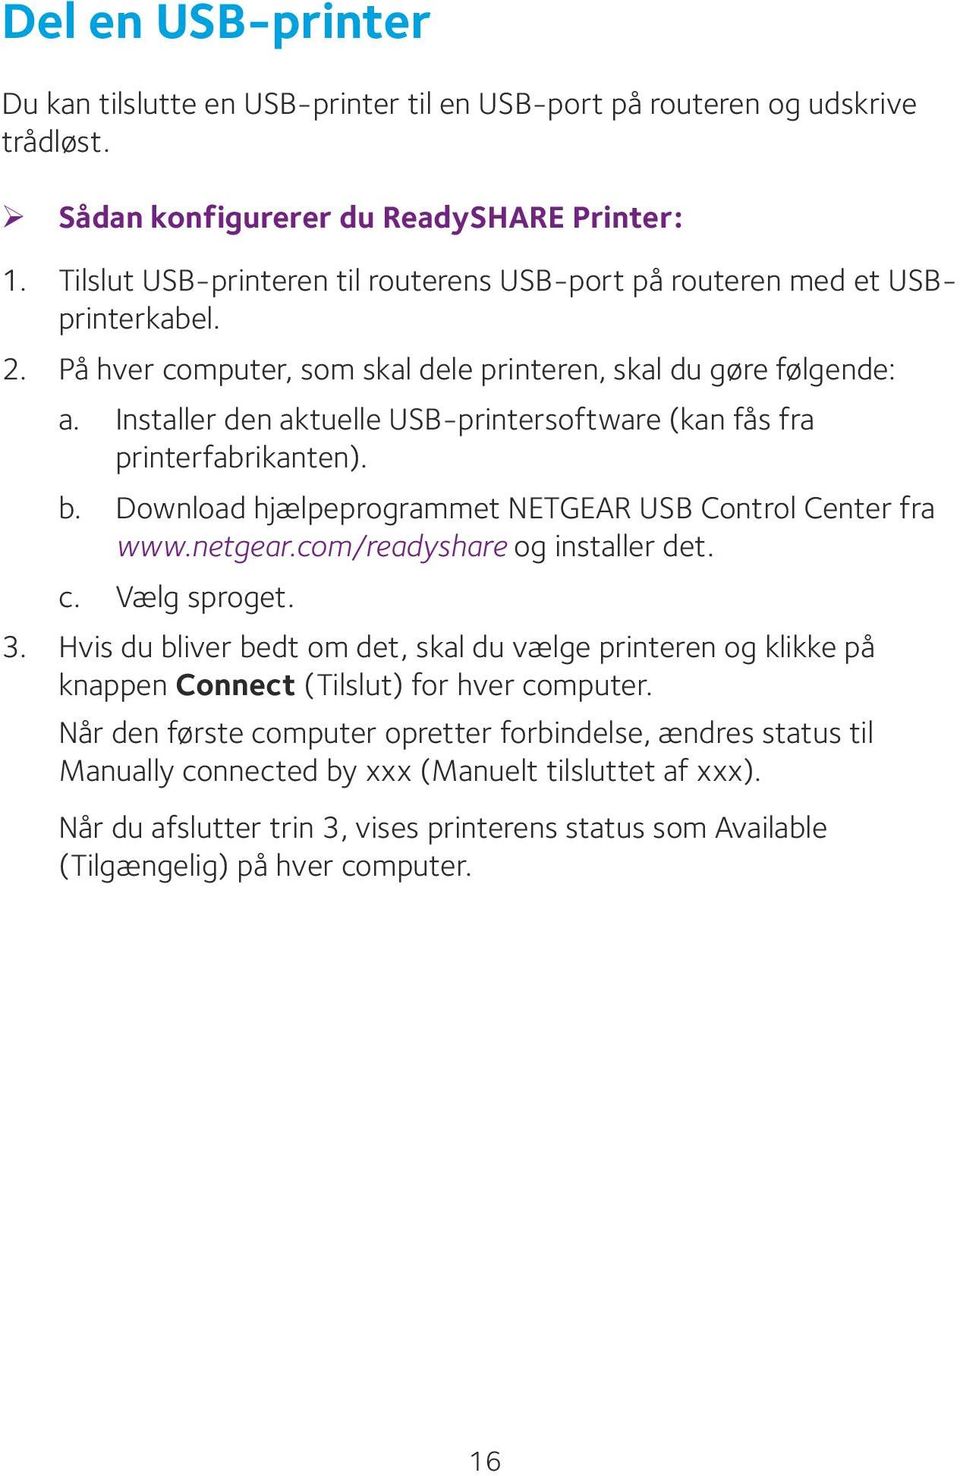 Installer den aktuelle USB-printersoftware (kan fås fra printerfabrikanten). b. Download hjælpeprogrammet NETGEAR USB Control Center fra www.netgear.com/readyshare og installer det. c. Vælg sproget.